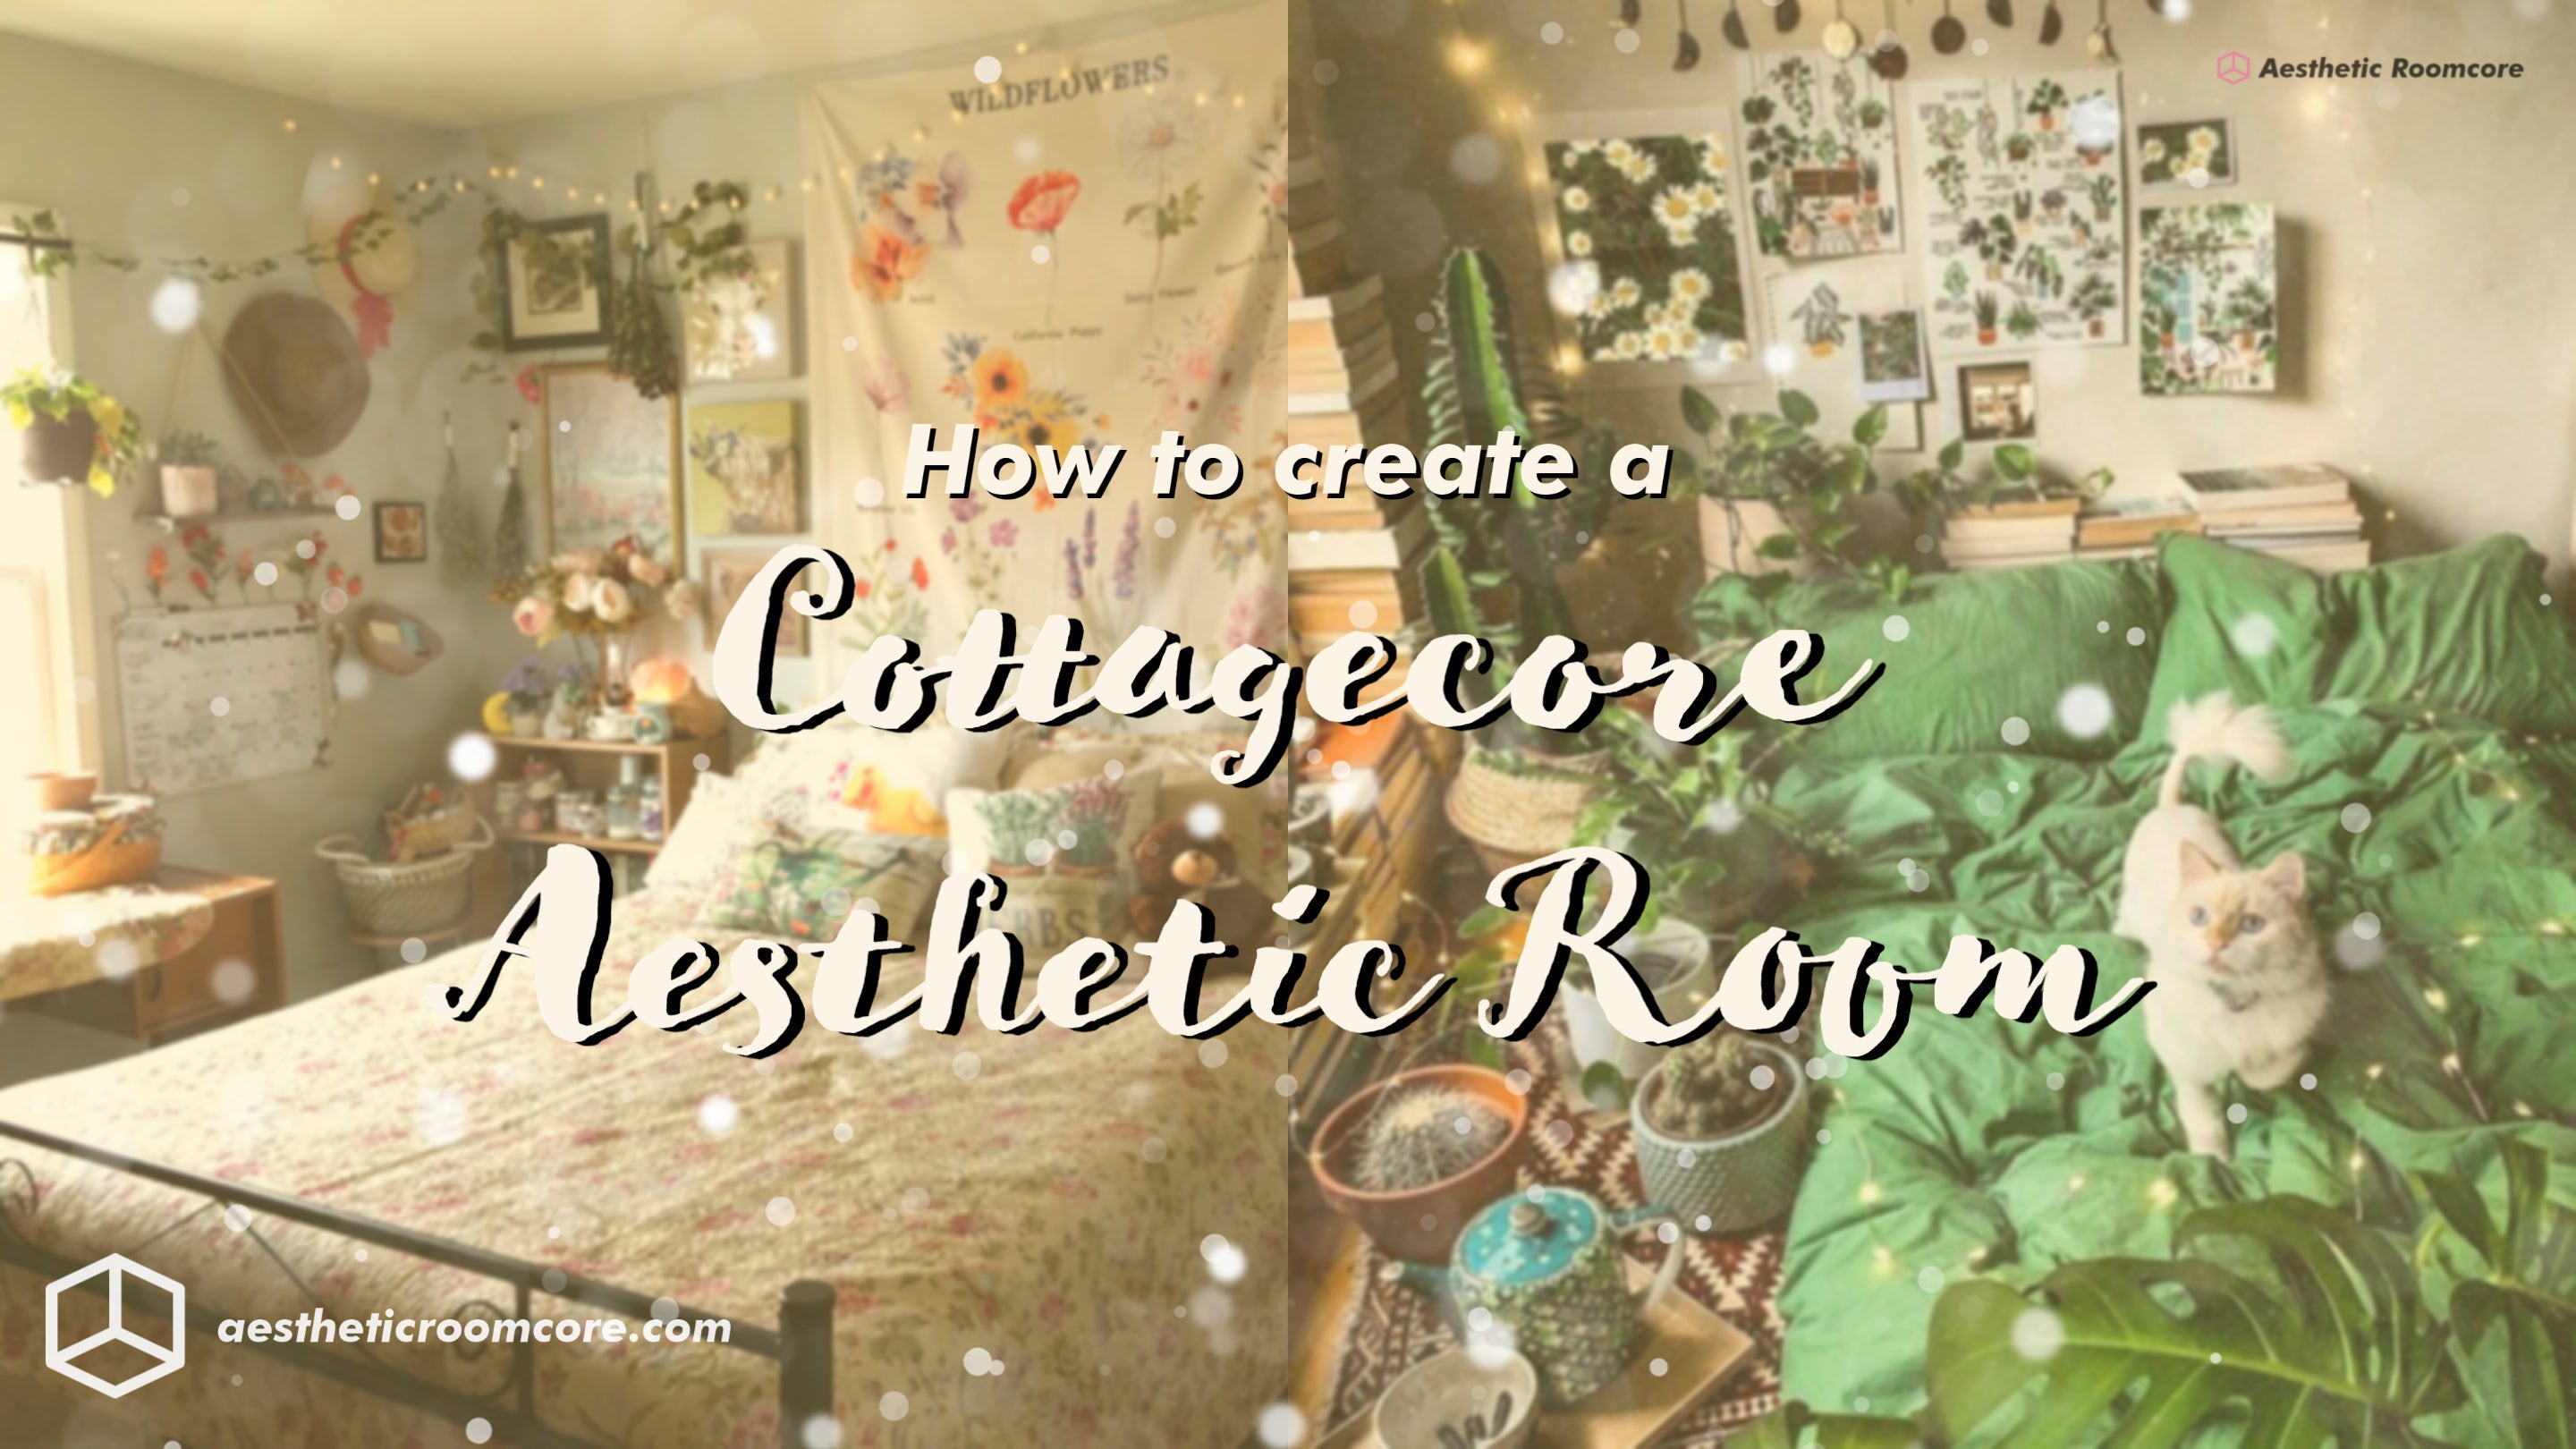 15 Coquette Room Decor Ideas: Tips to Create the Feminine Decor